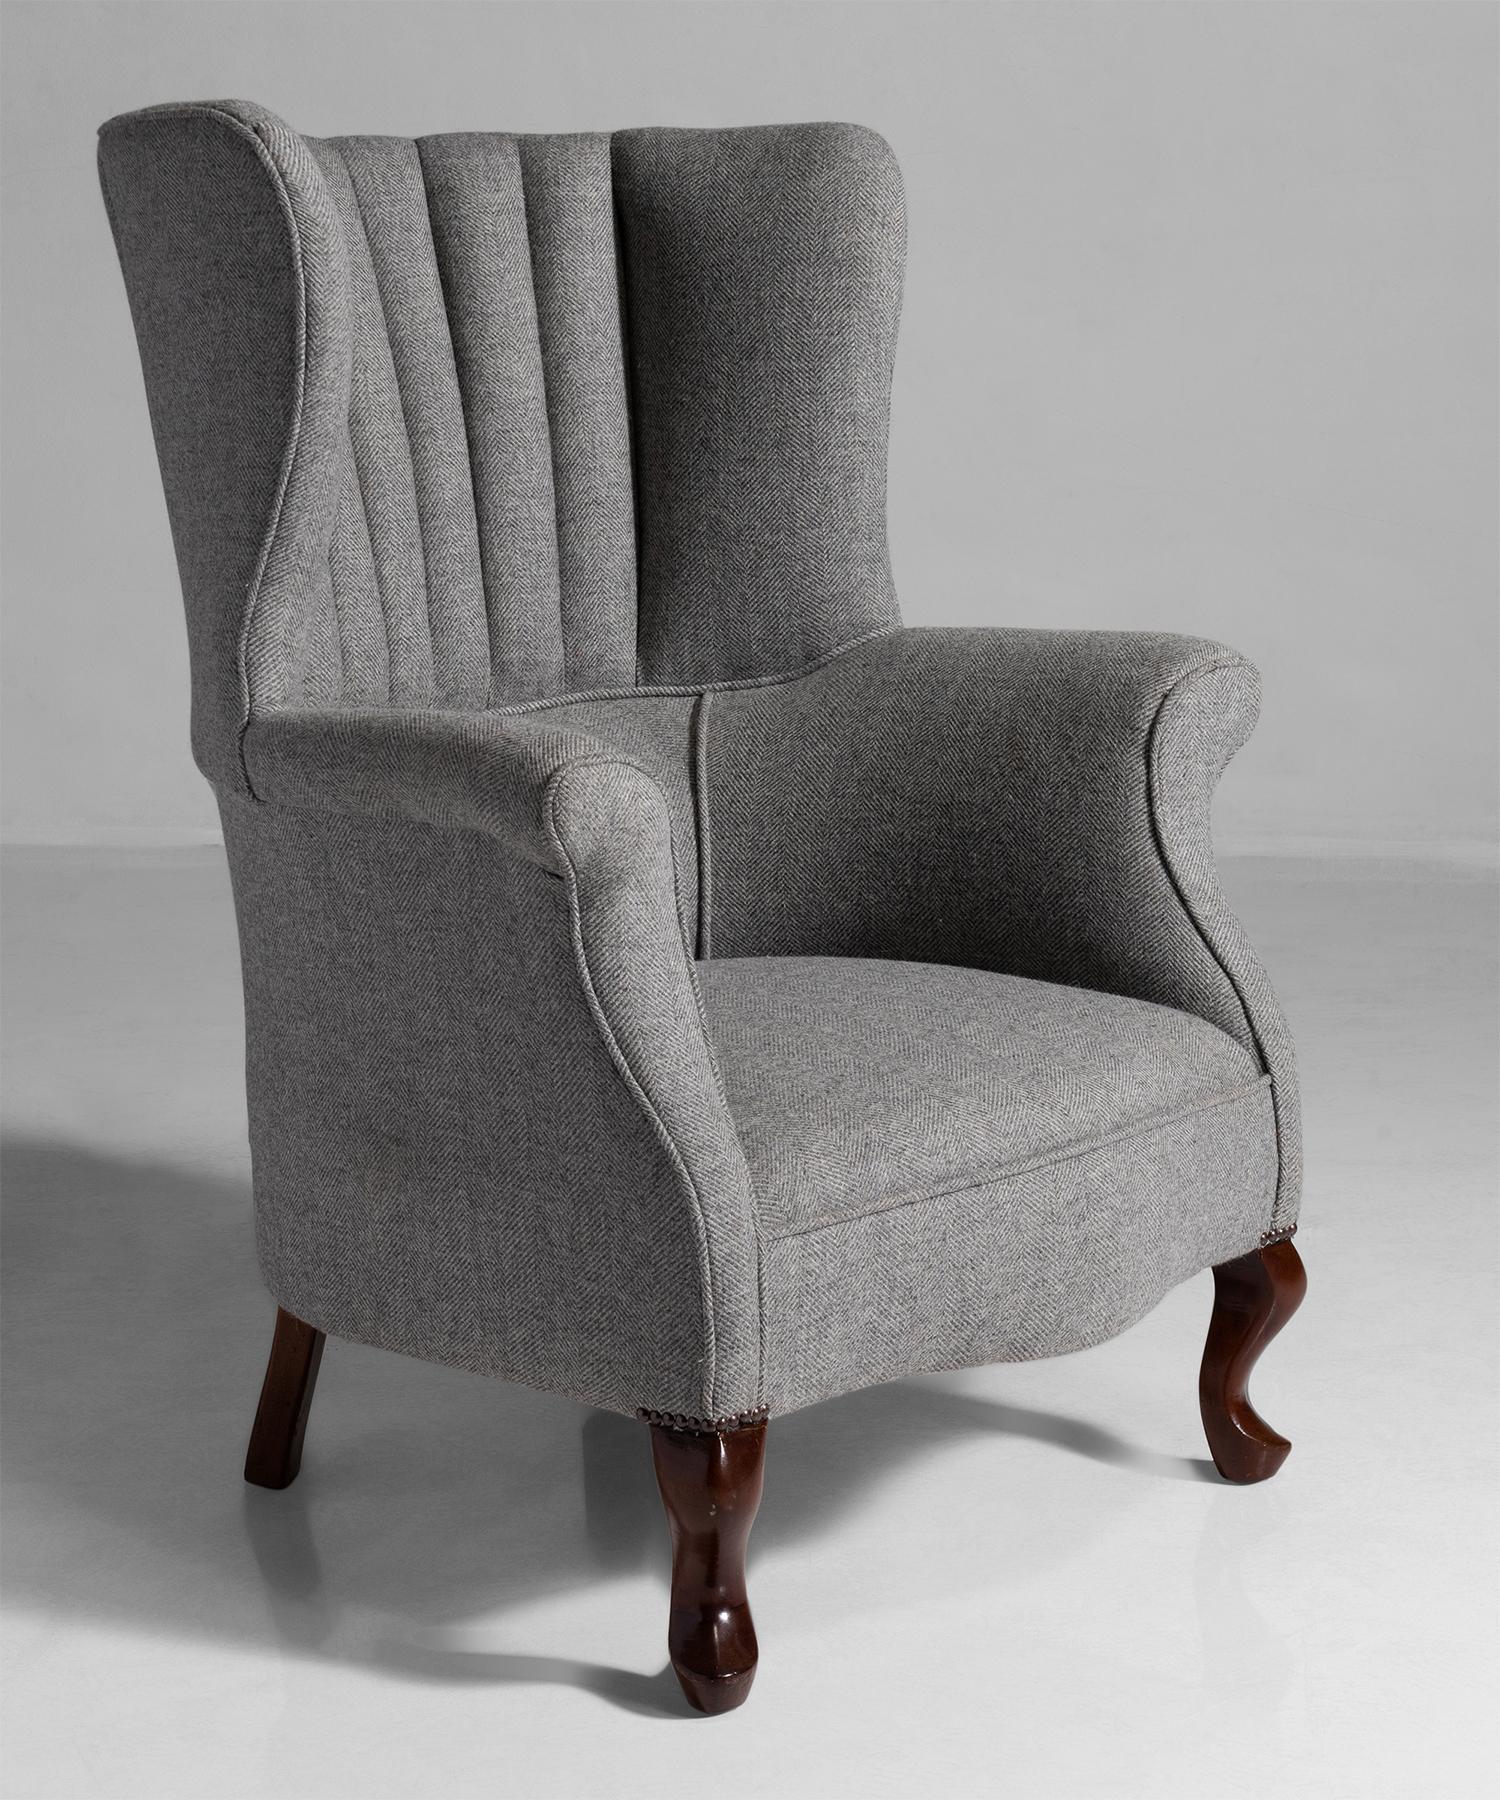 Edwardian barrel back armchair, England, circa 1910.

Newly upholstered in a wool herringbone tweed on mahogany legs.